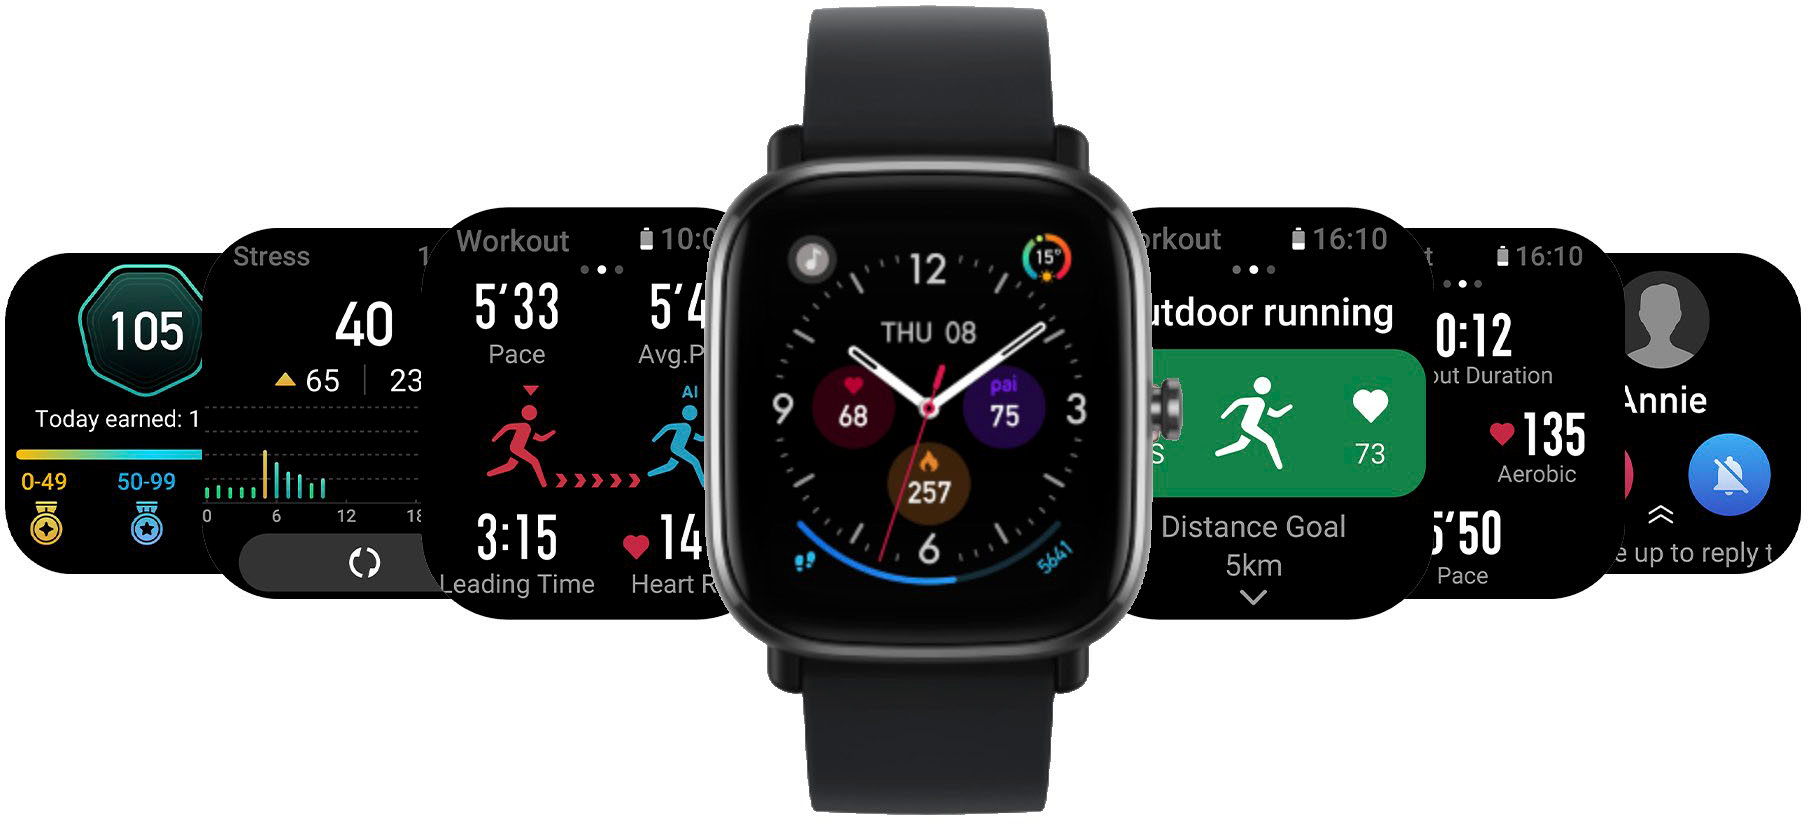 Comprá Reloj Smartwatch Amazfit GTS 2 Mini A2018 - Envios a todo